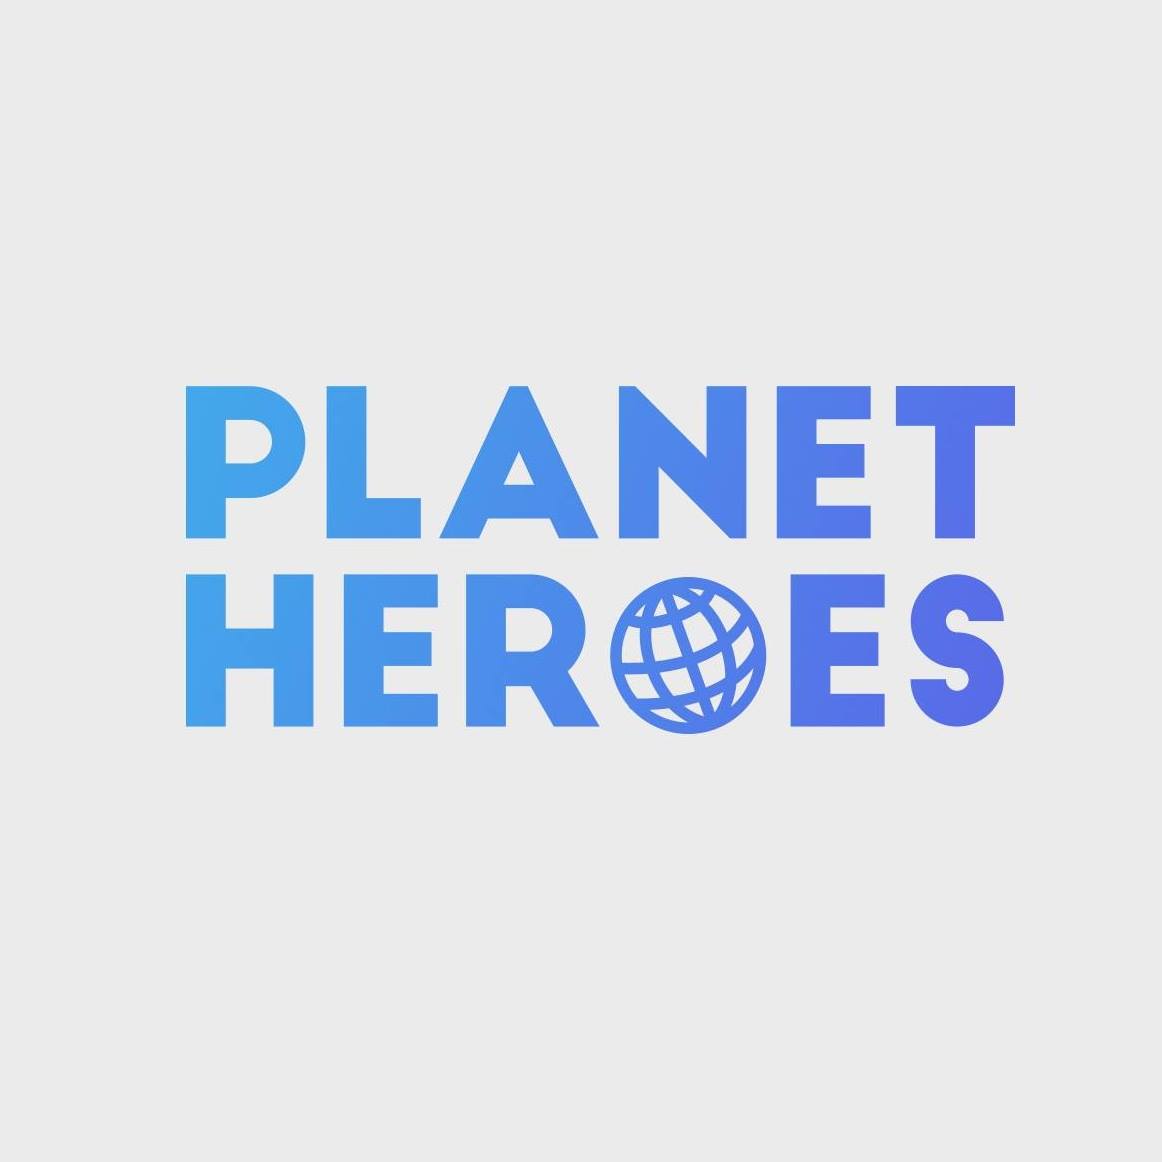 #PlanetHeroes